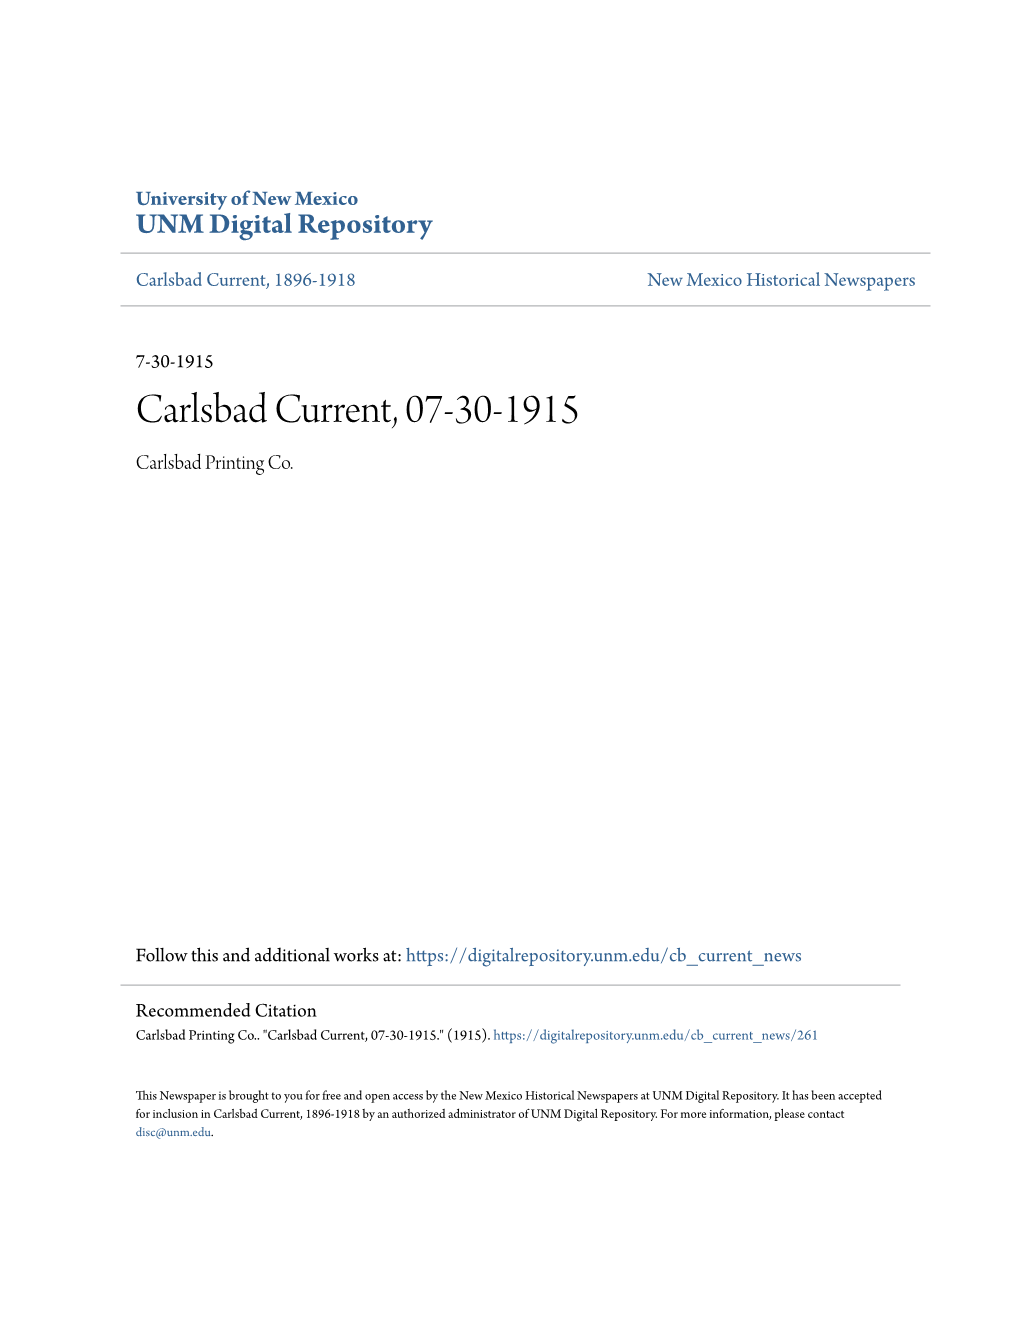 Carlsbad Current, 07-30-1915 Carlsbad Printing Co